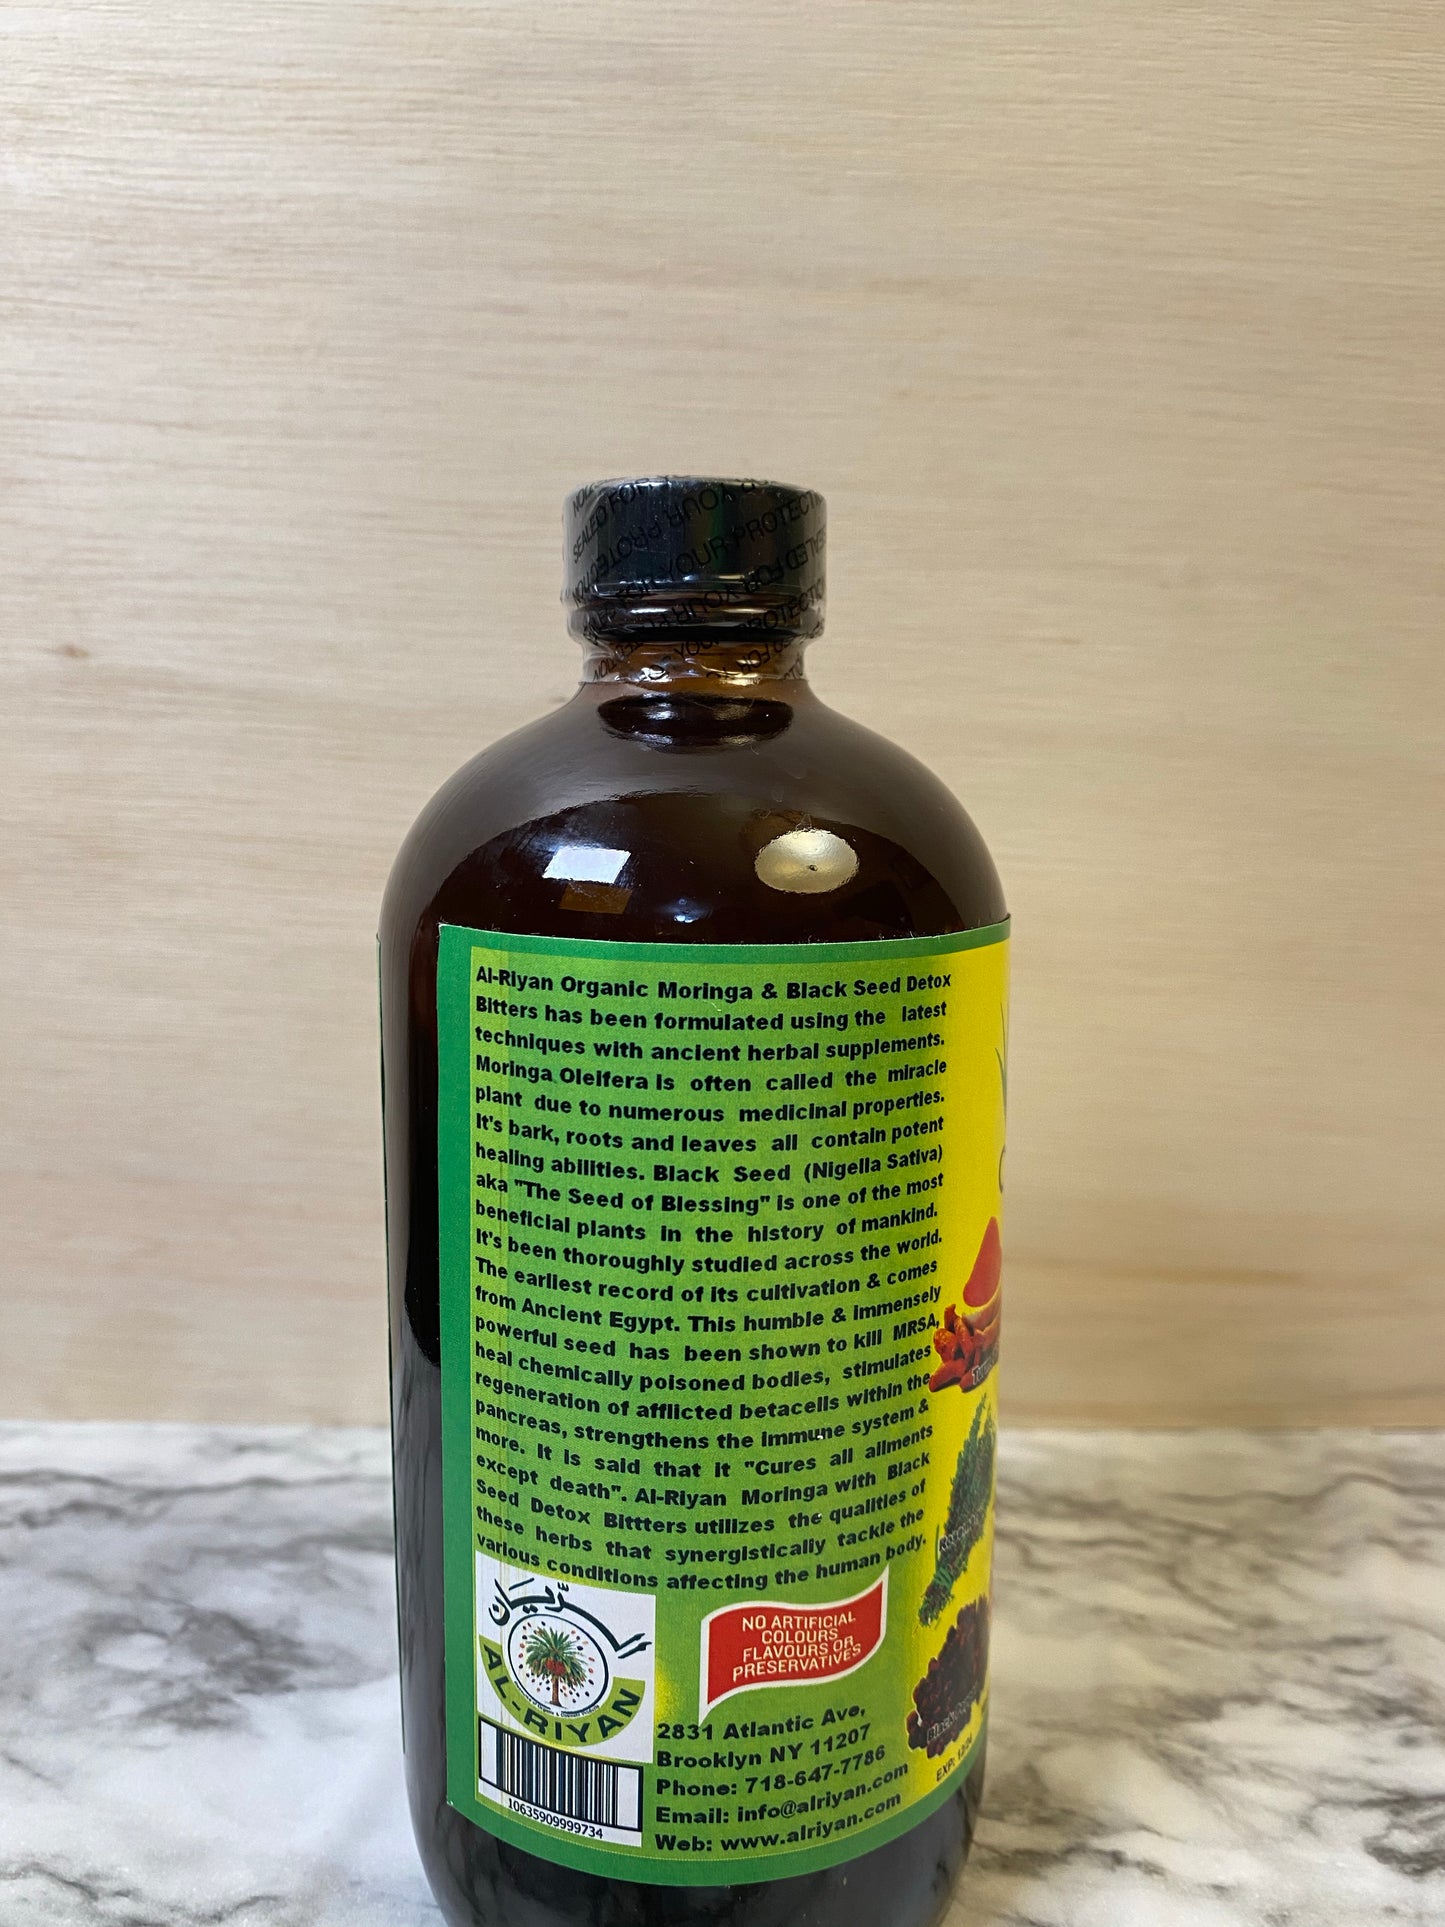 Organic Moringa & Black Seed Detox Bitters